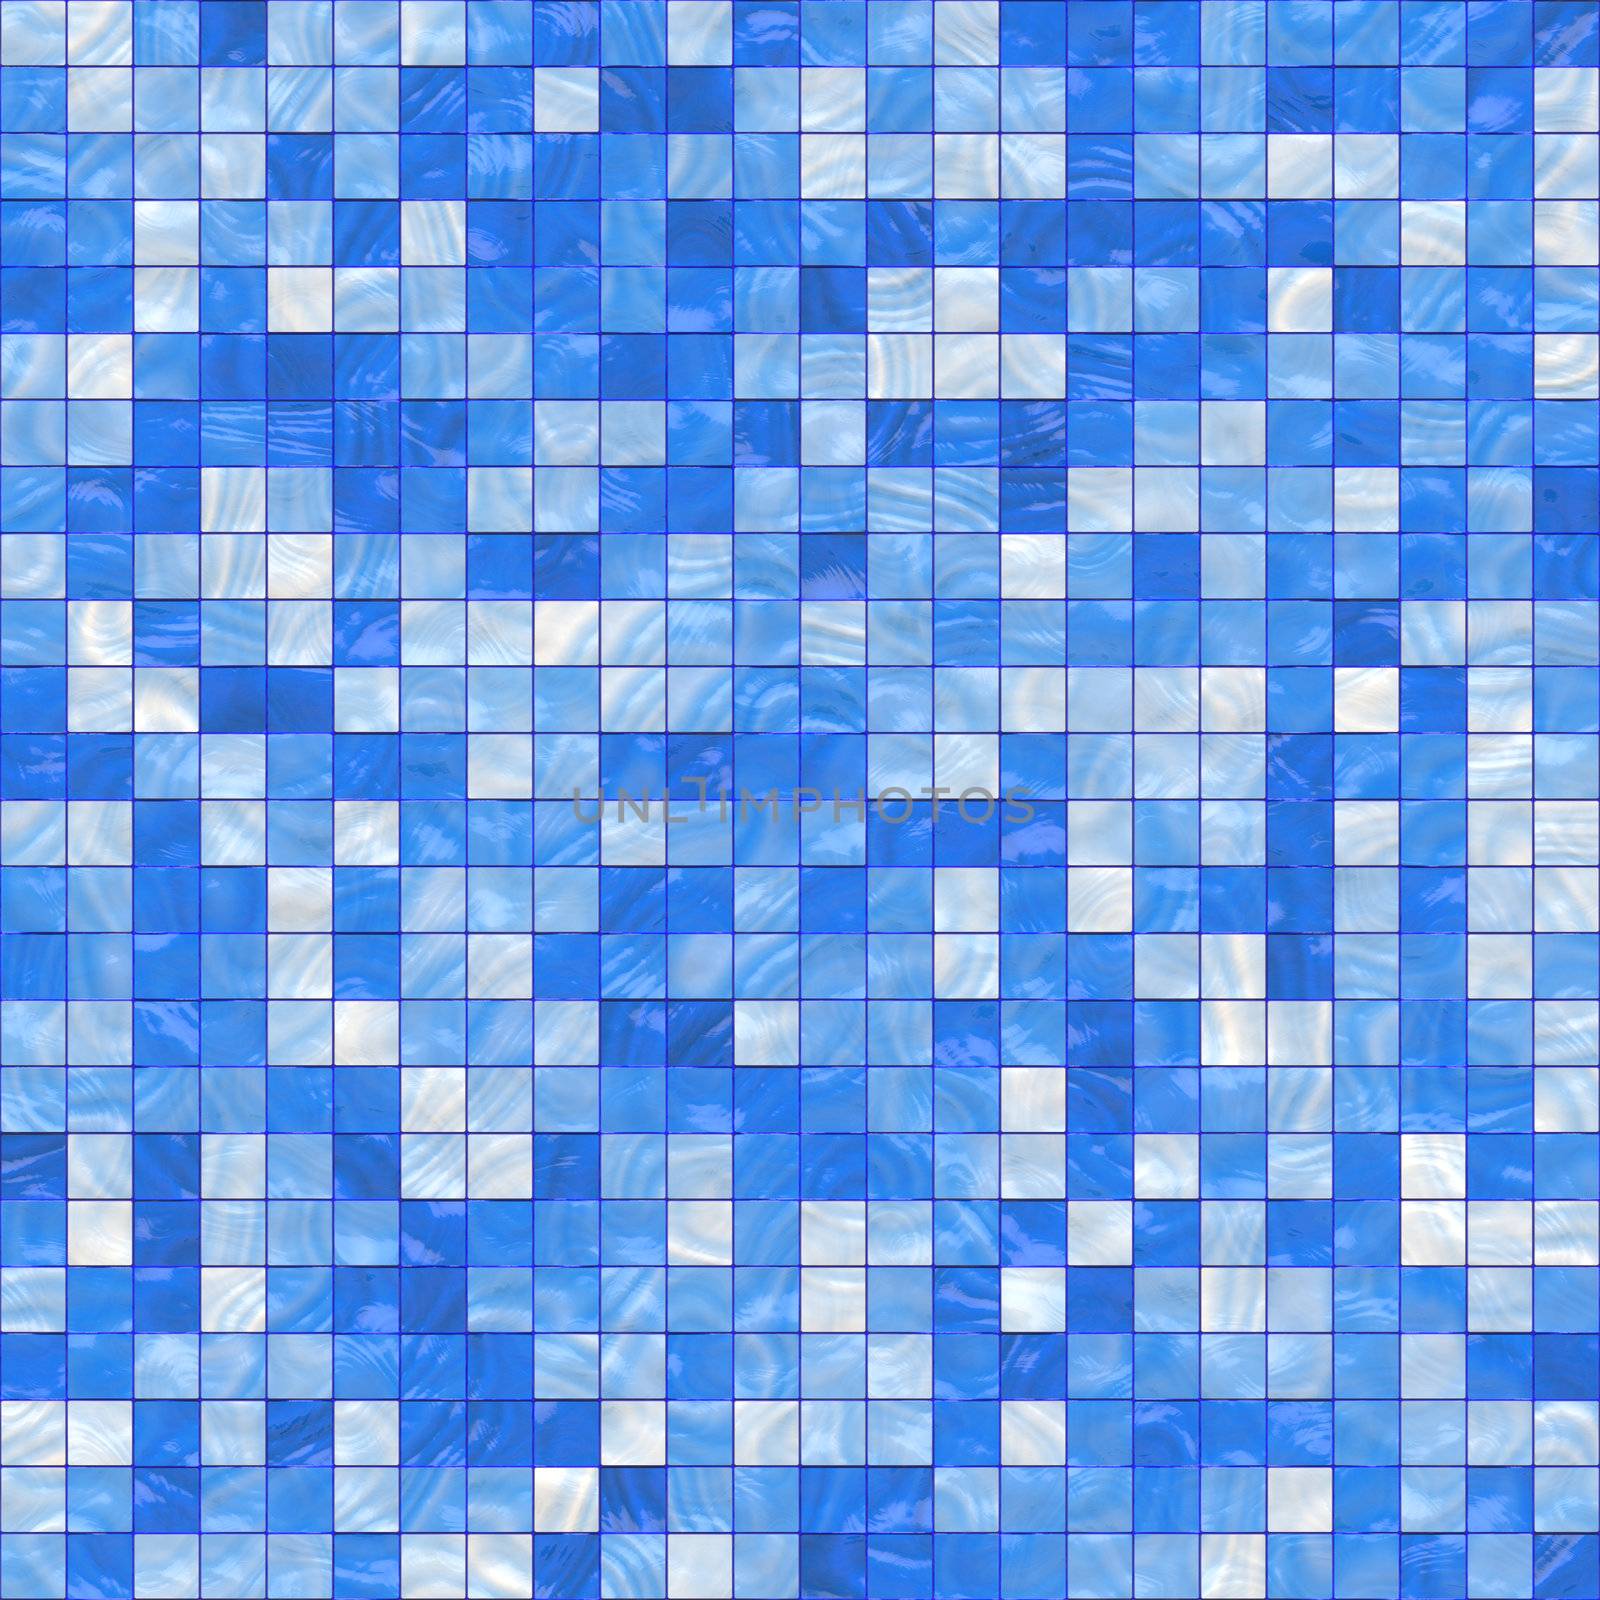 small blue tiles by hospitalera